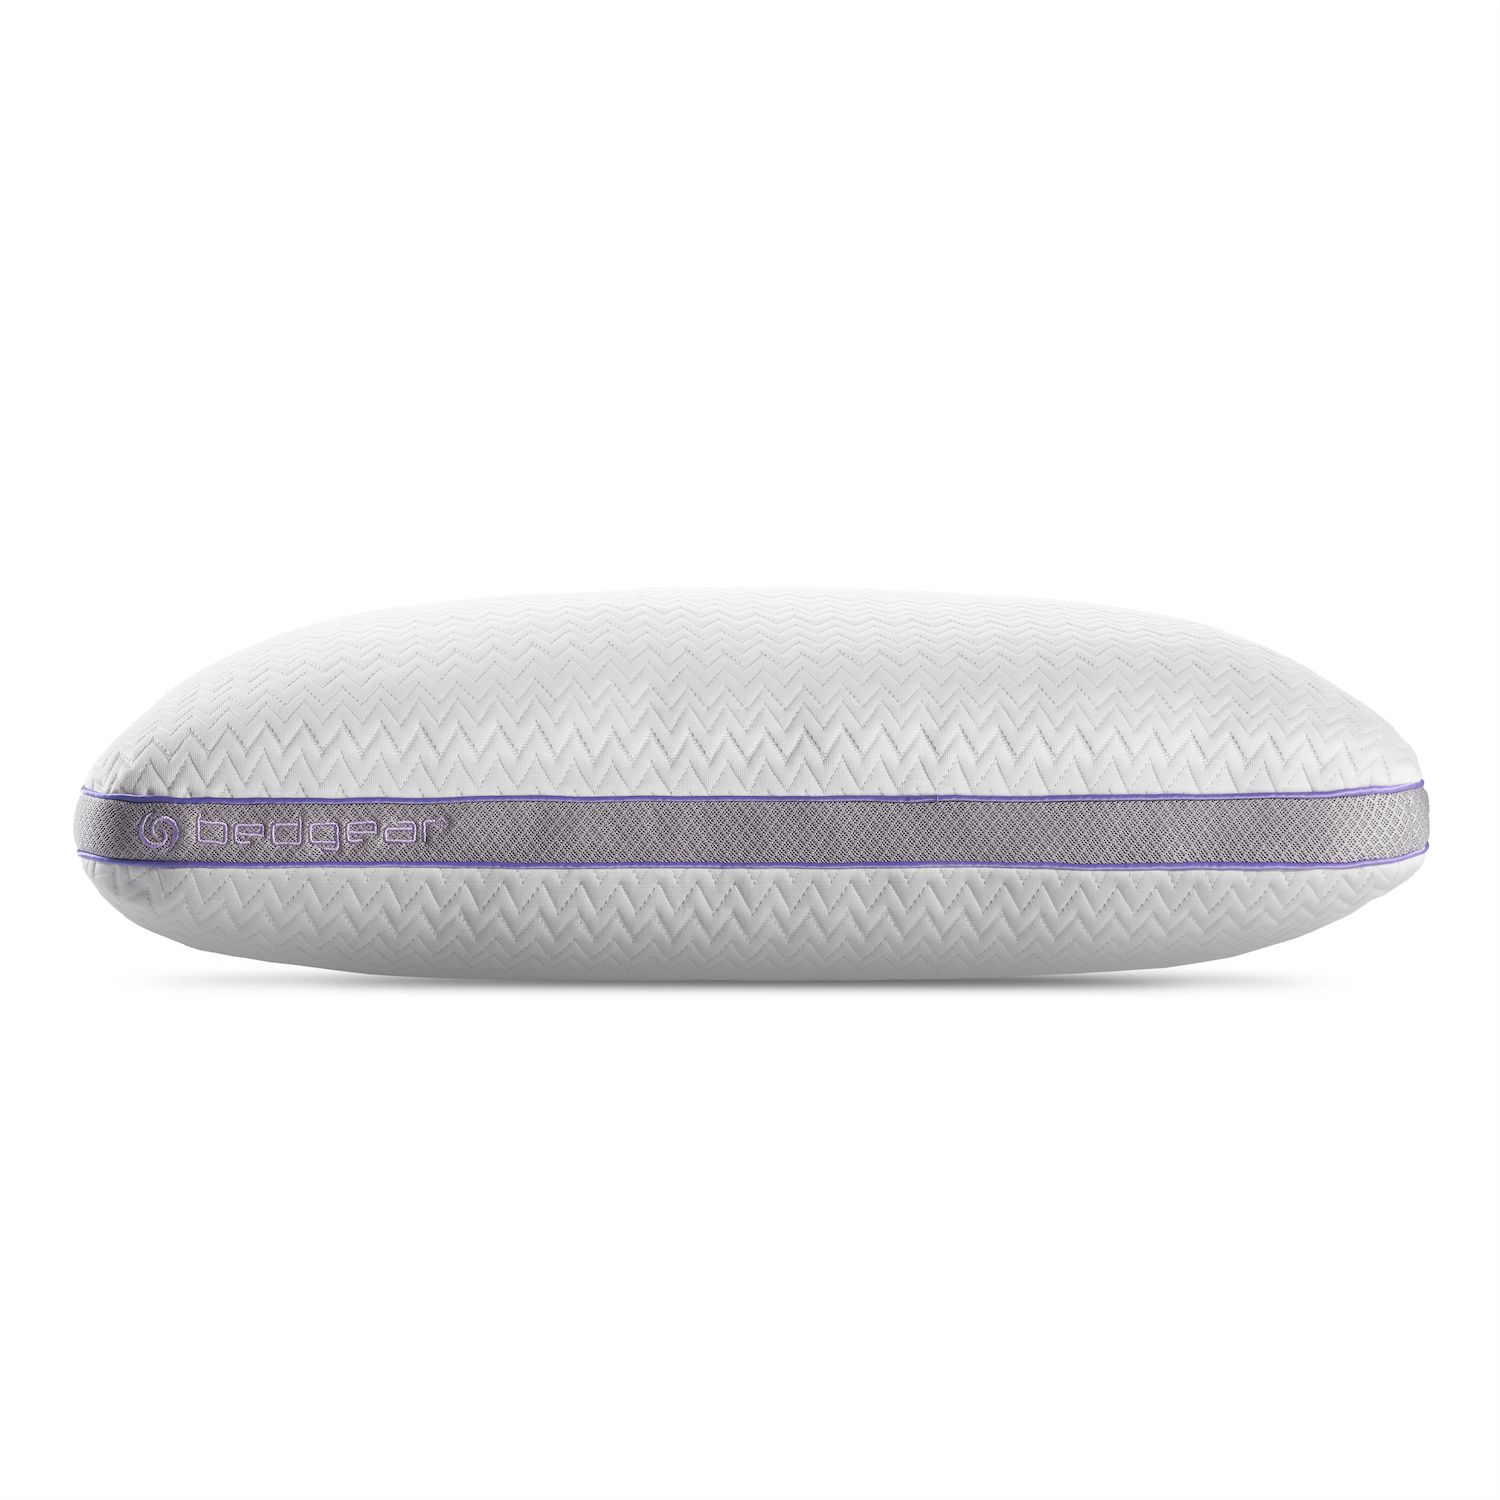 Bedgear Performance Cooling Pillow